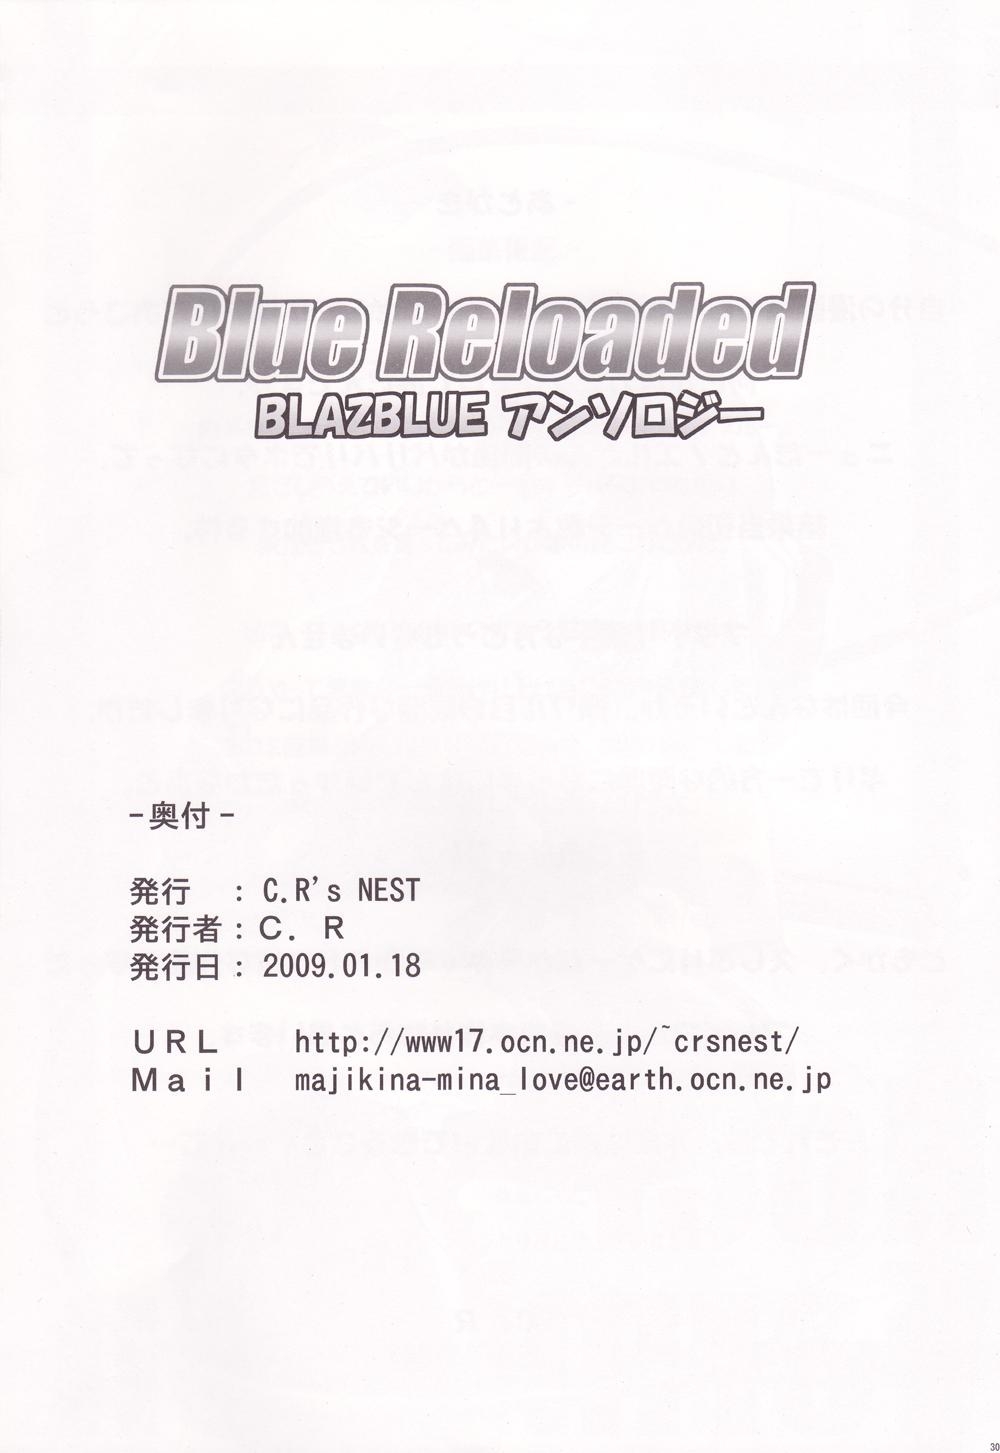 [C.R's NEST] Blue Reloaded (Blazblue) 28